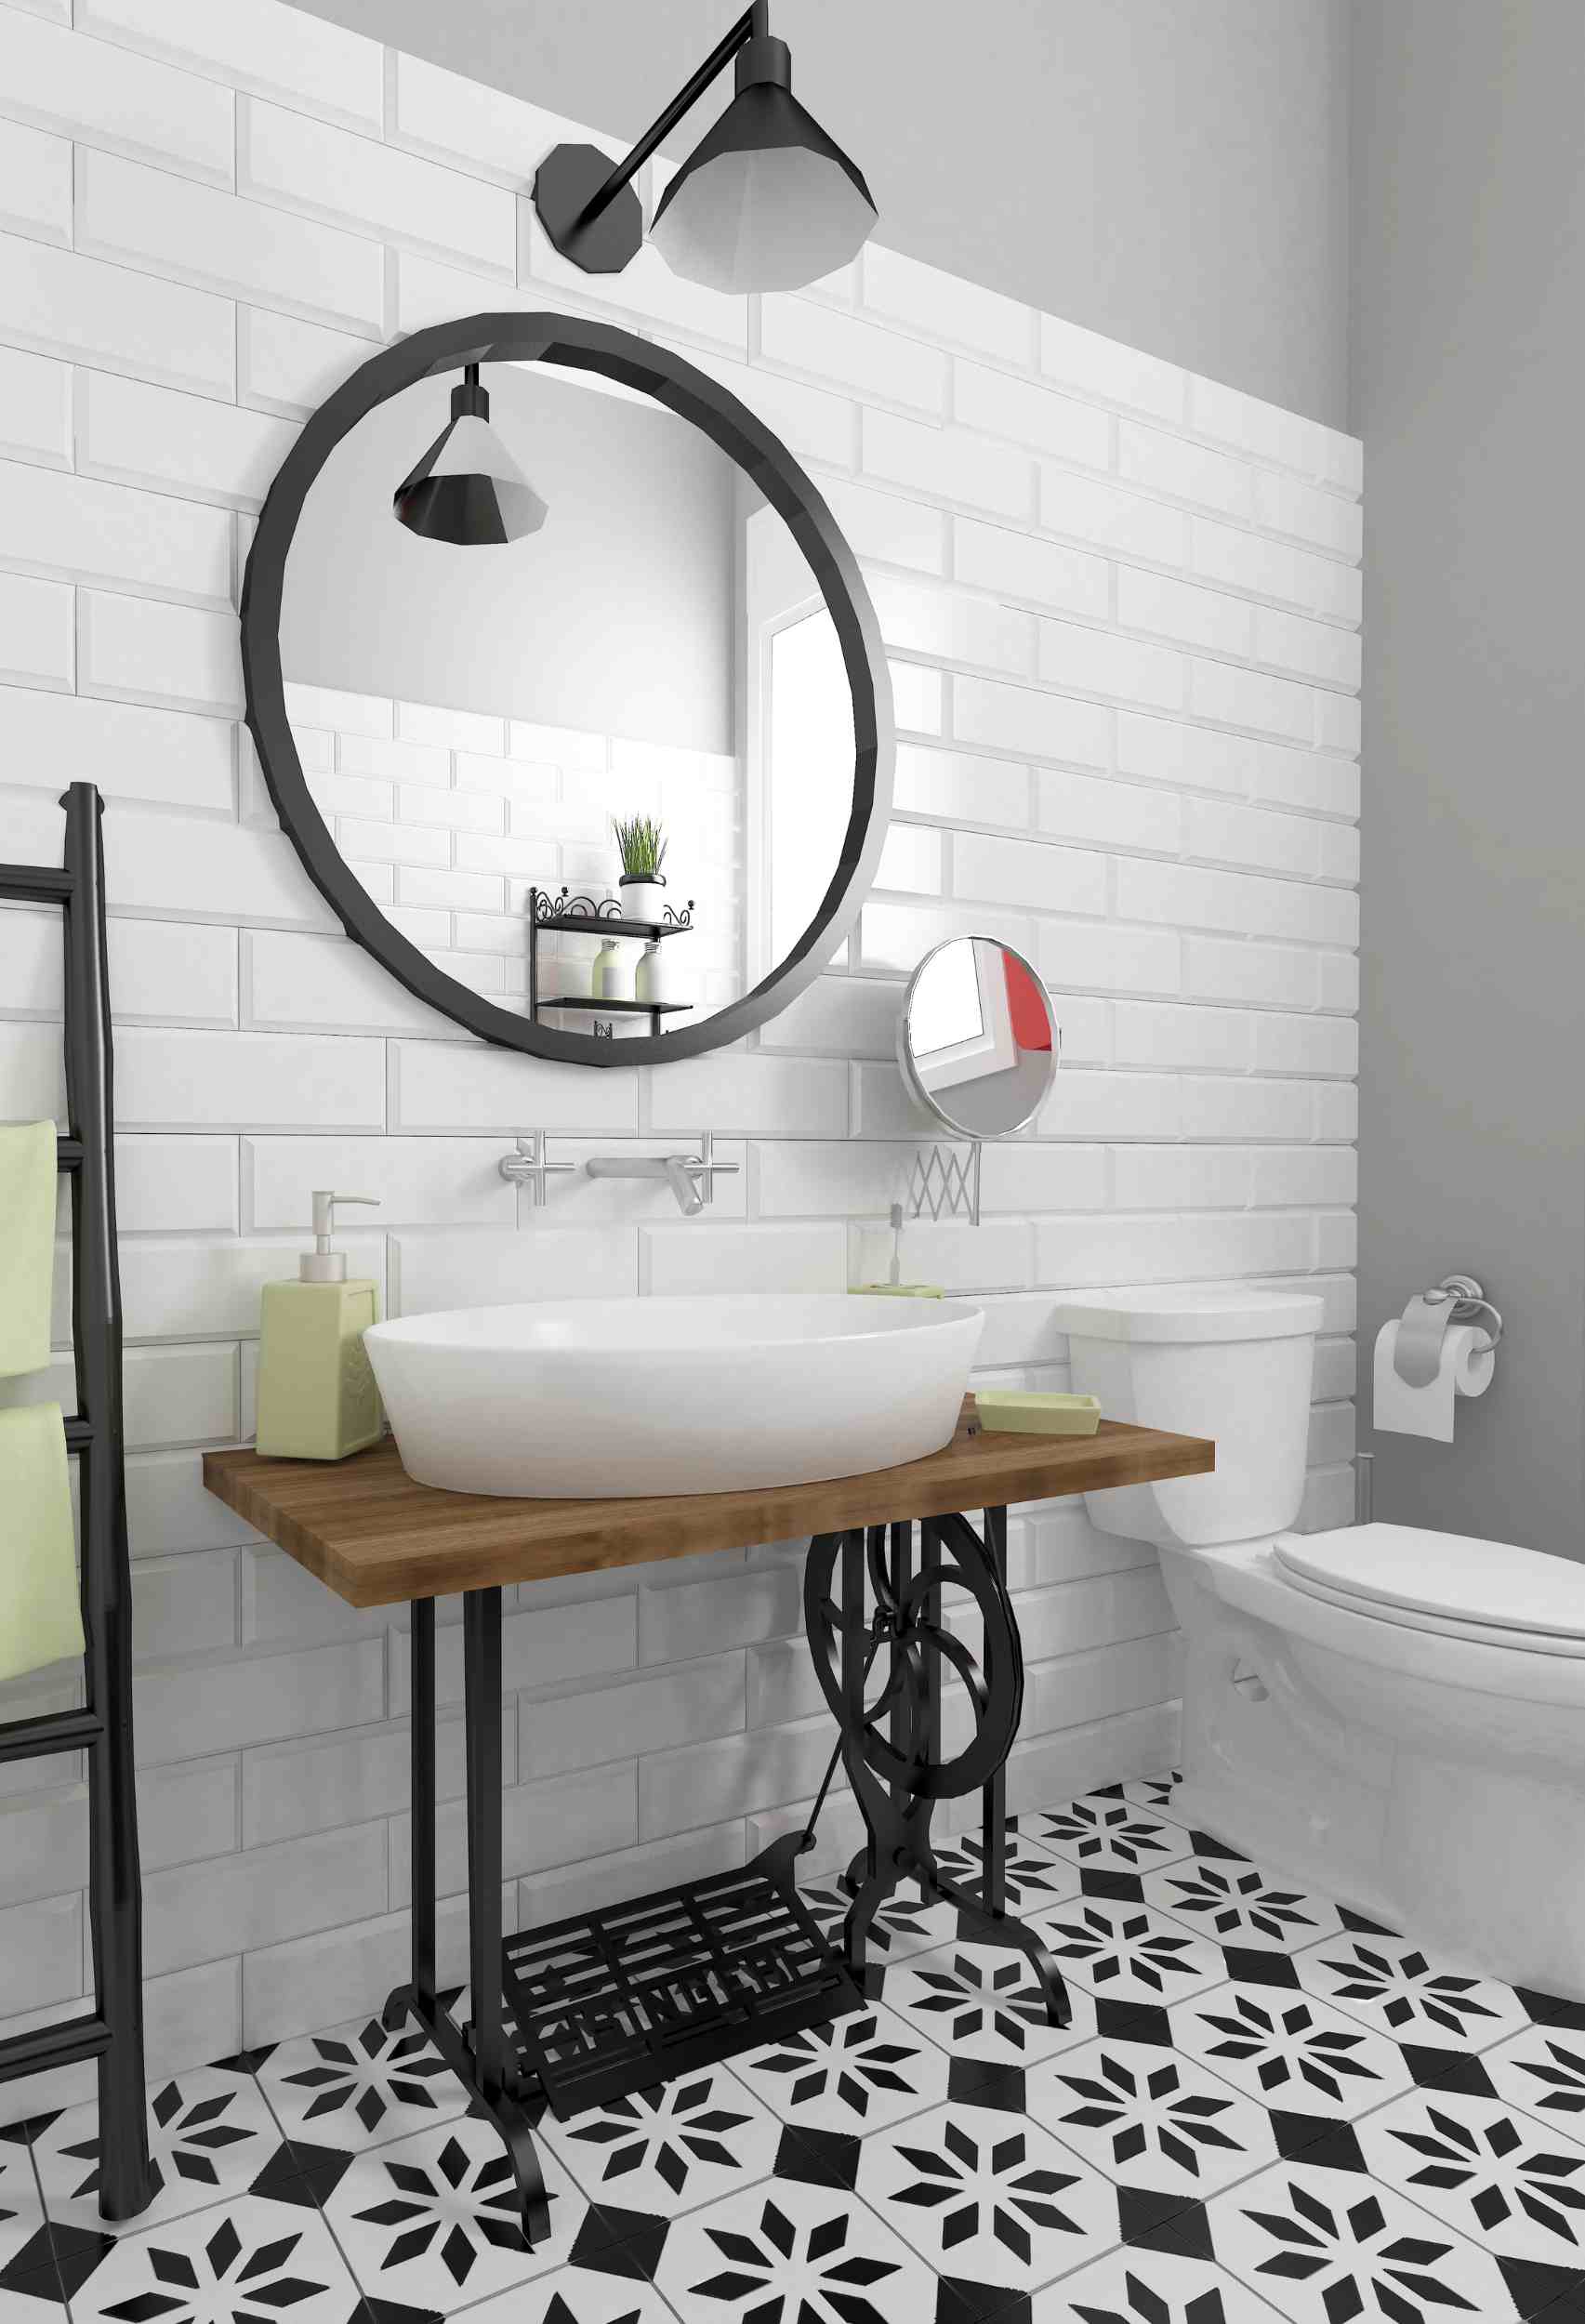 Small Space, Big Impact: Key Tips for Cozy Bathroom Design